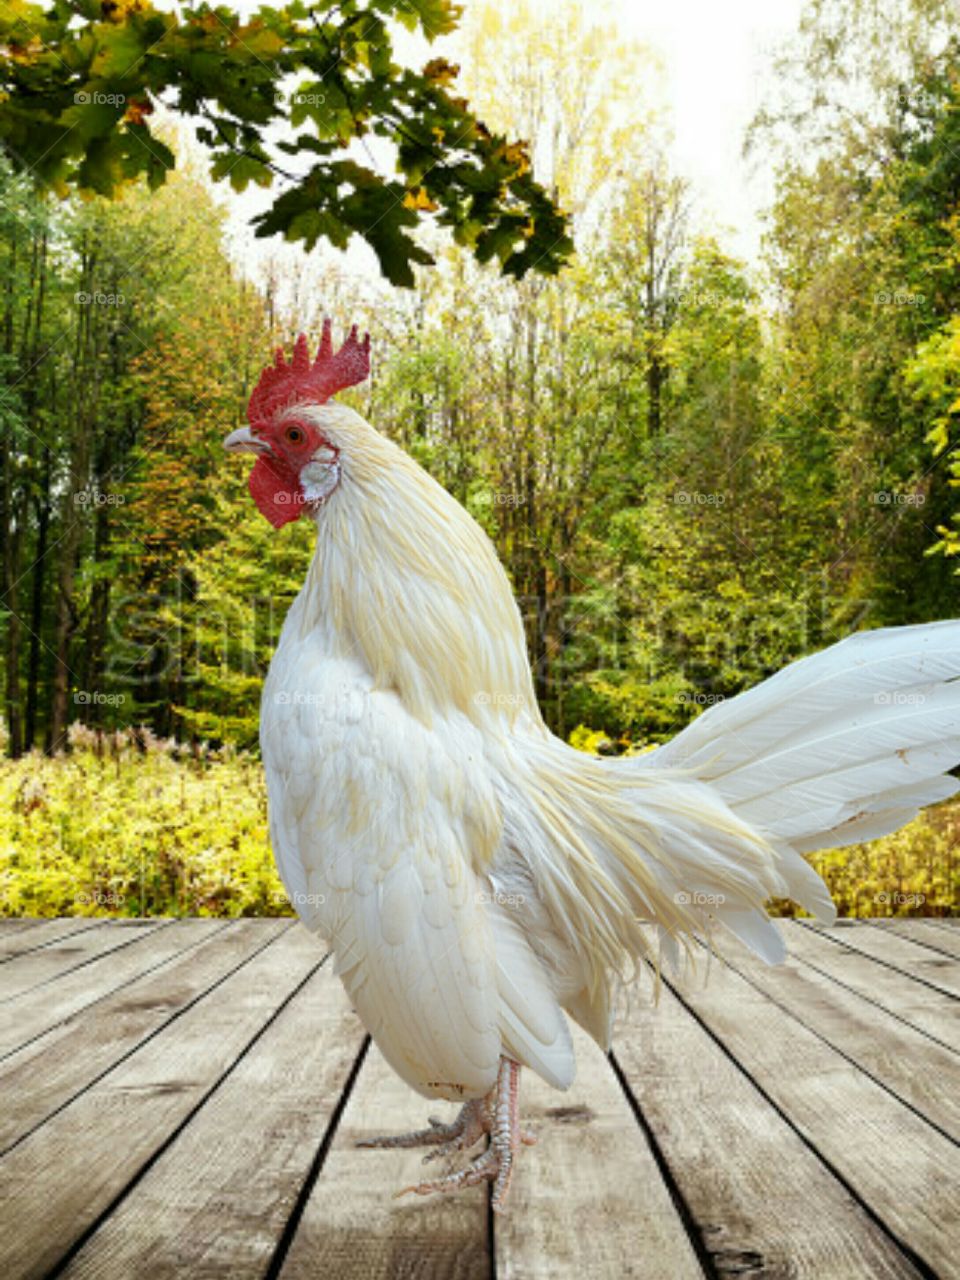 Cock image.